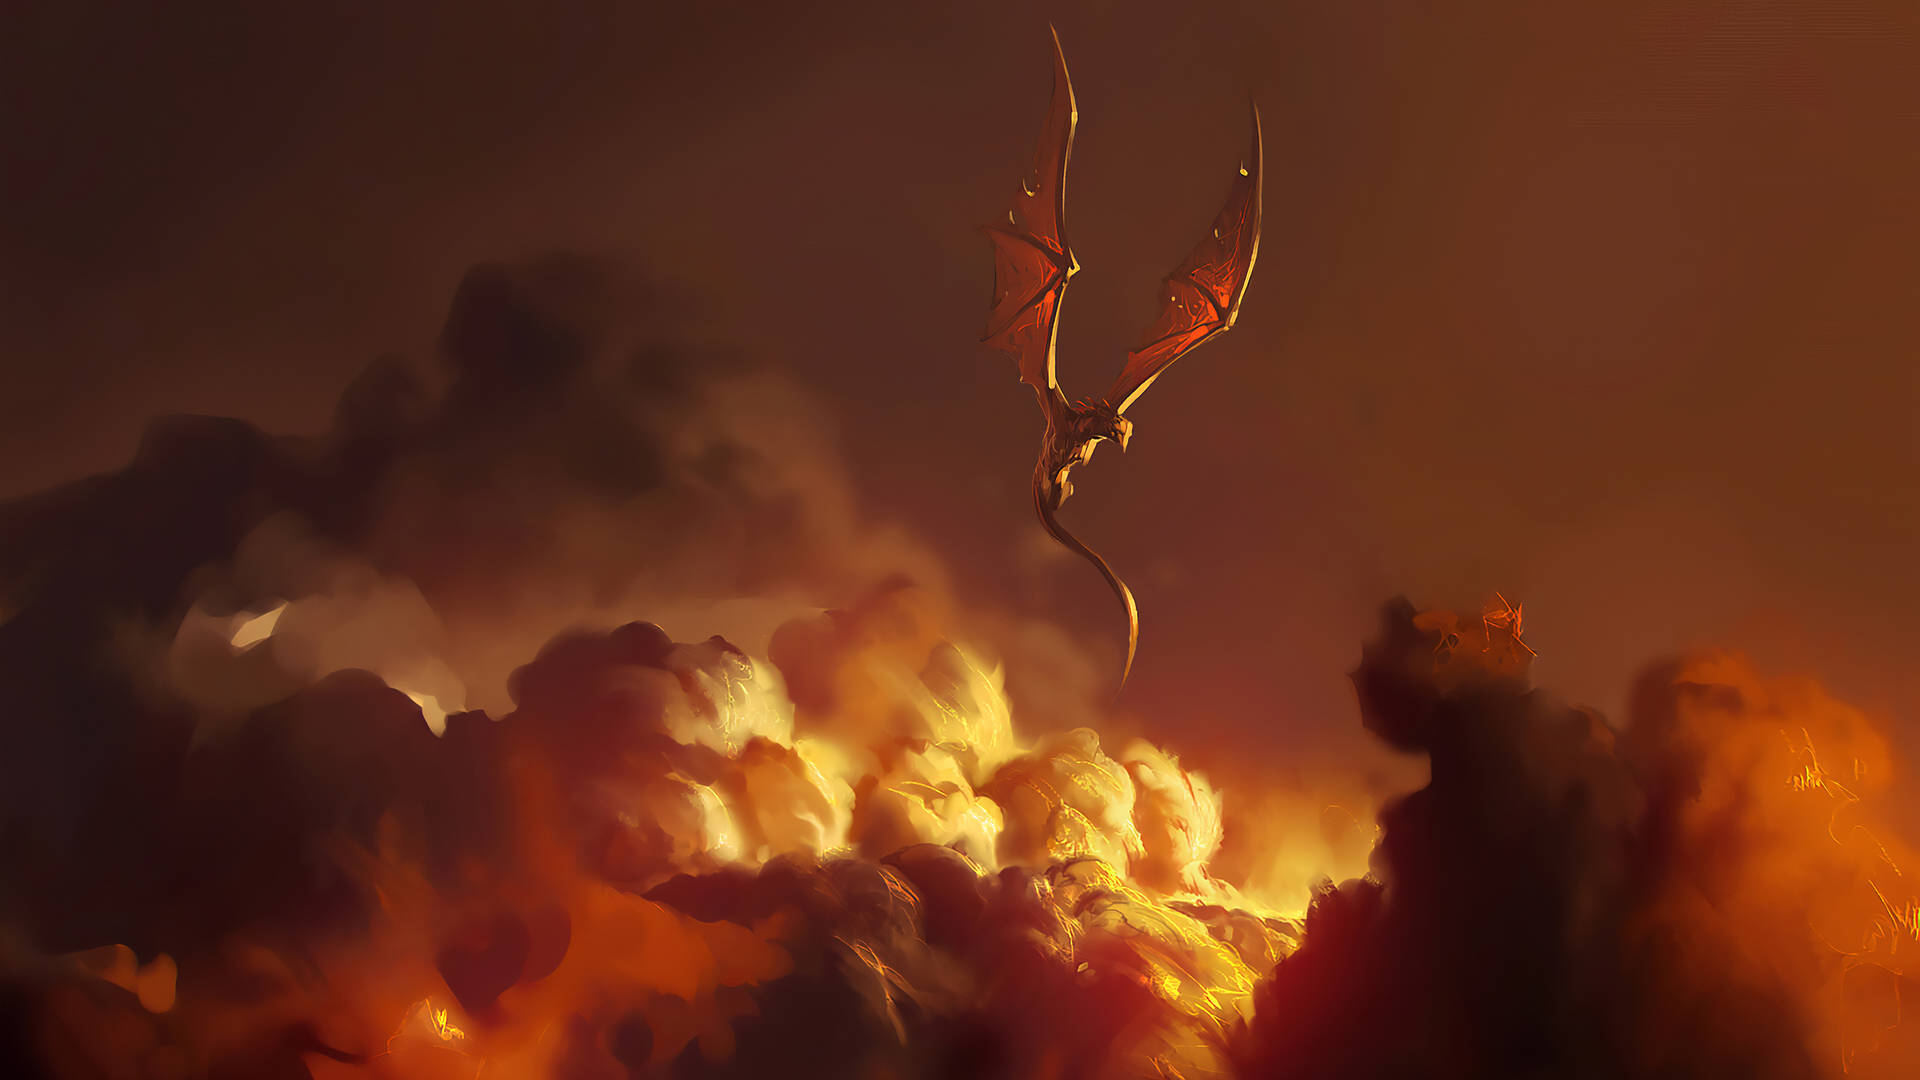 Orange 4k Sky Digital Painting With Dragon Background